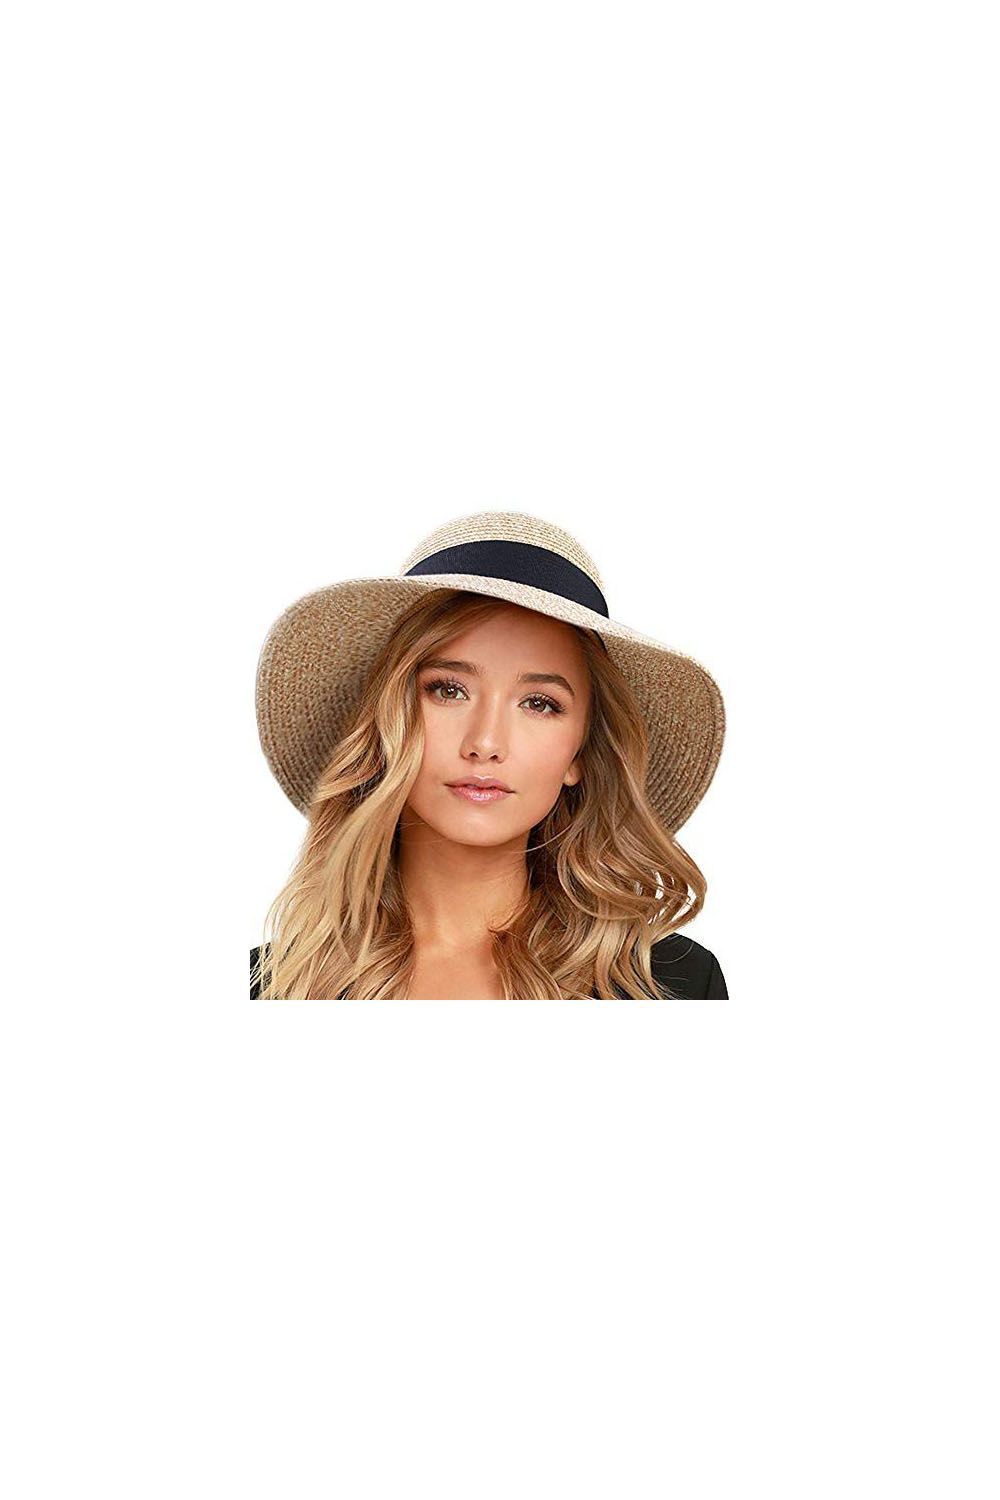 Black braid Beach fedora hat sun hats hats for women straw hat